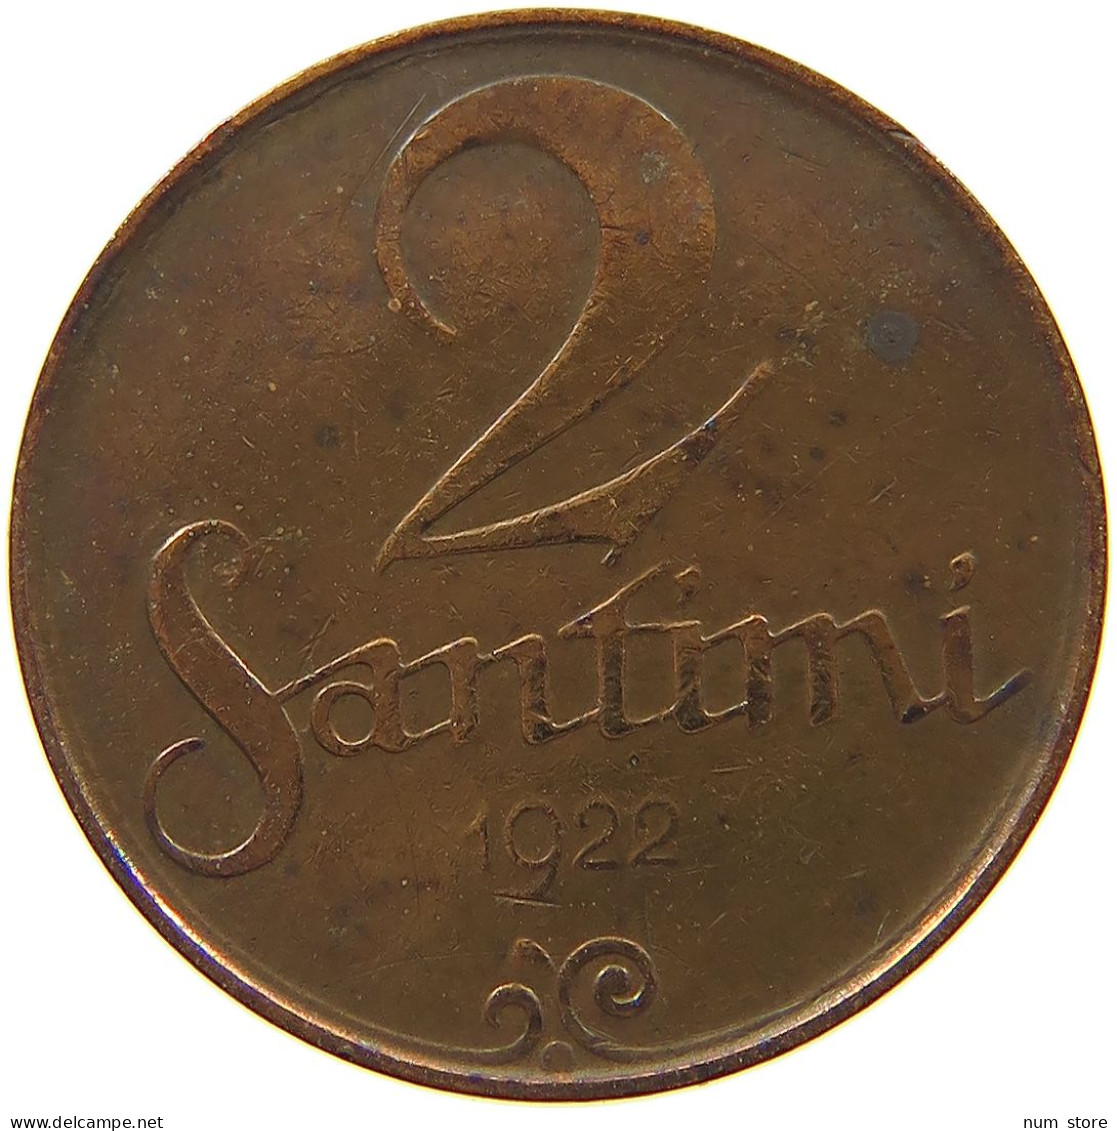 LATVIA 2 SANTIMI 1922  #a085 0707 - Lettland